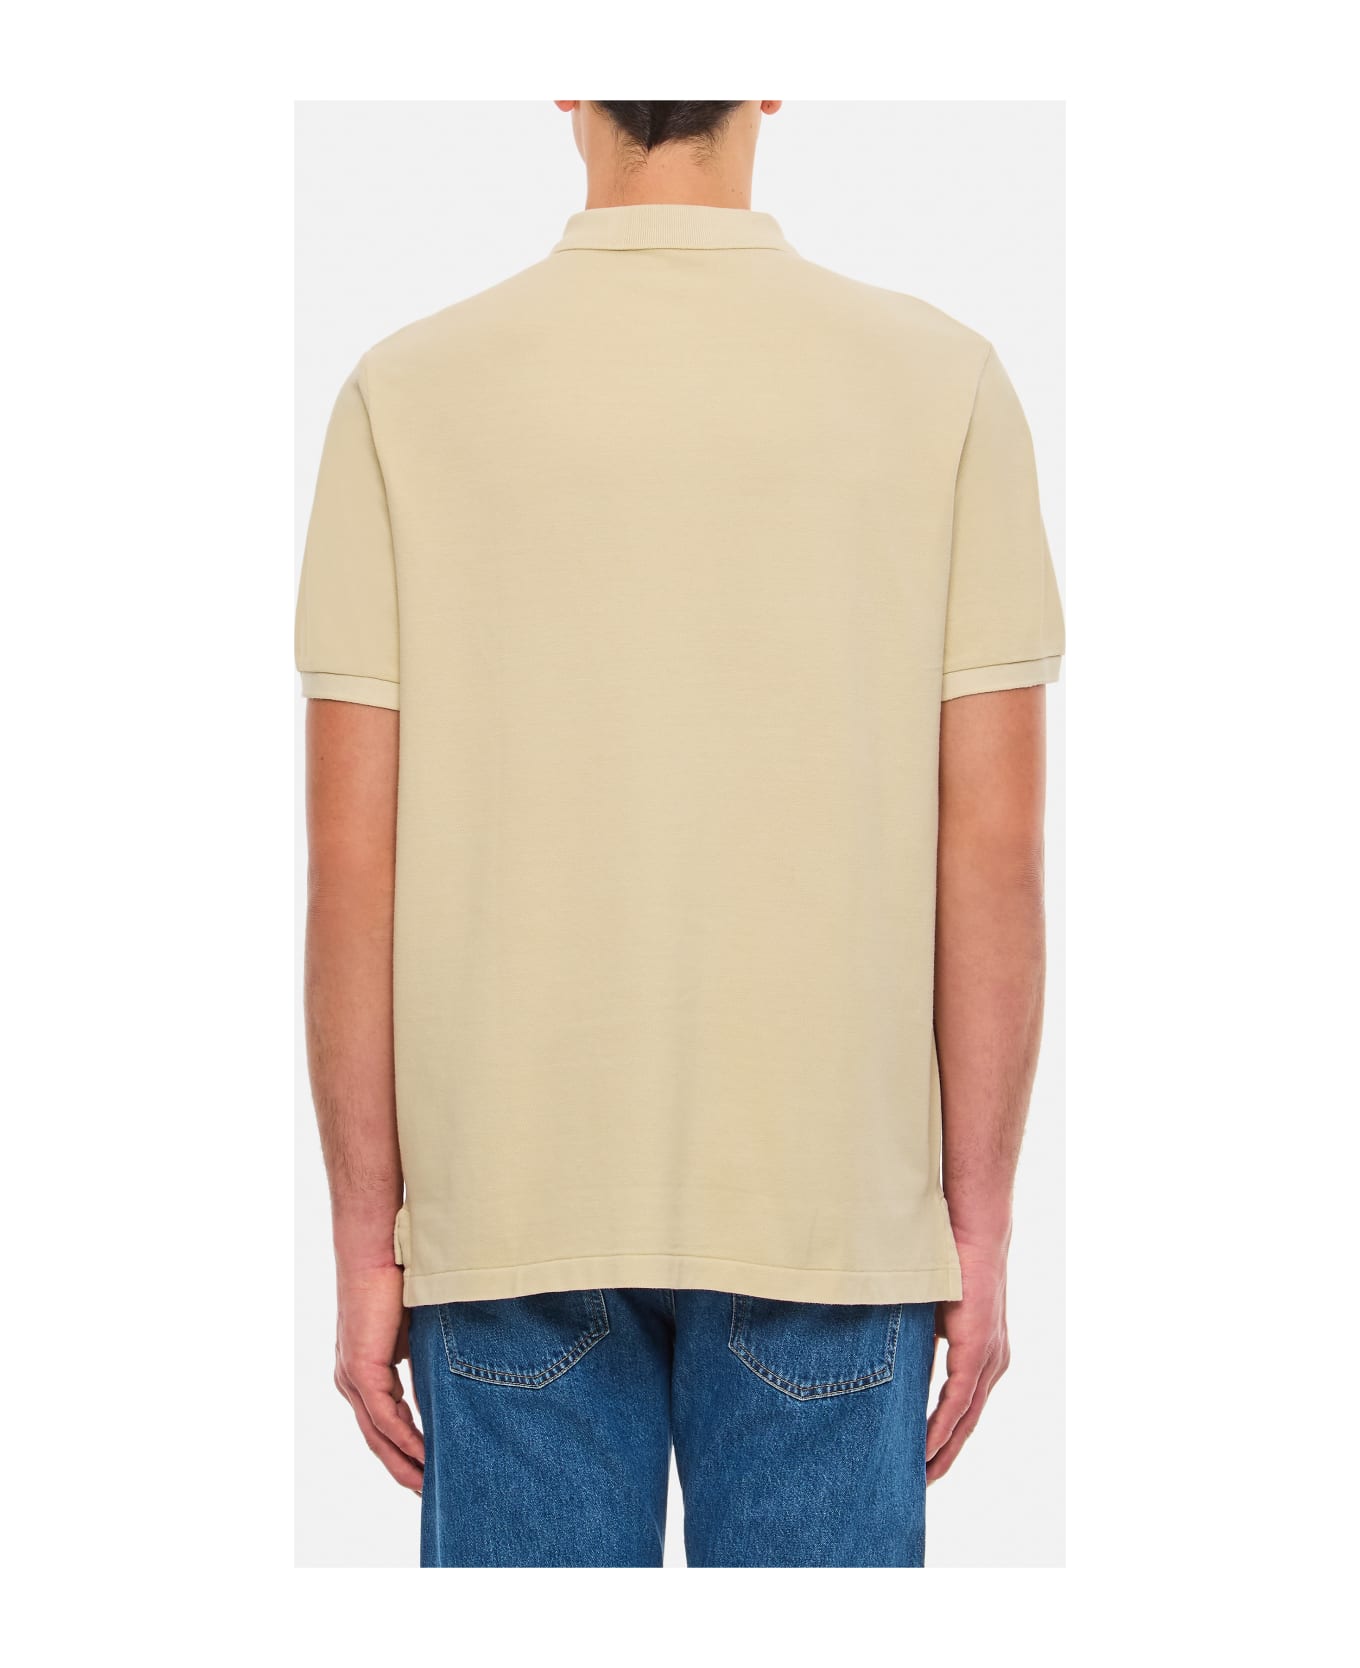 Ralph Lauren Cotton Polo Shirt - Beige シャツ